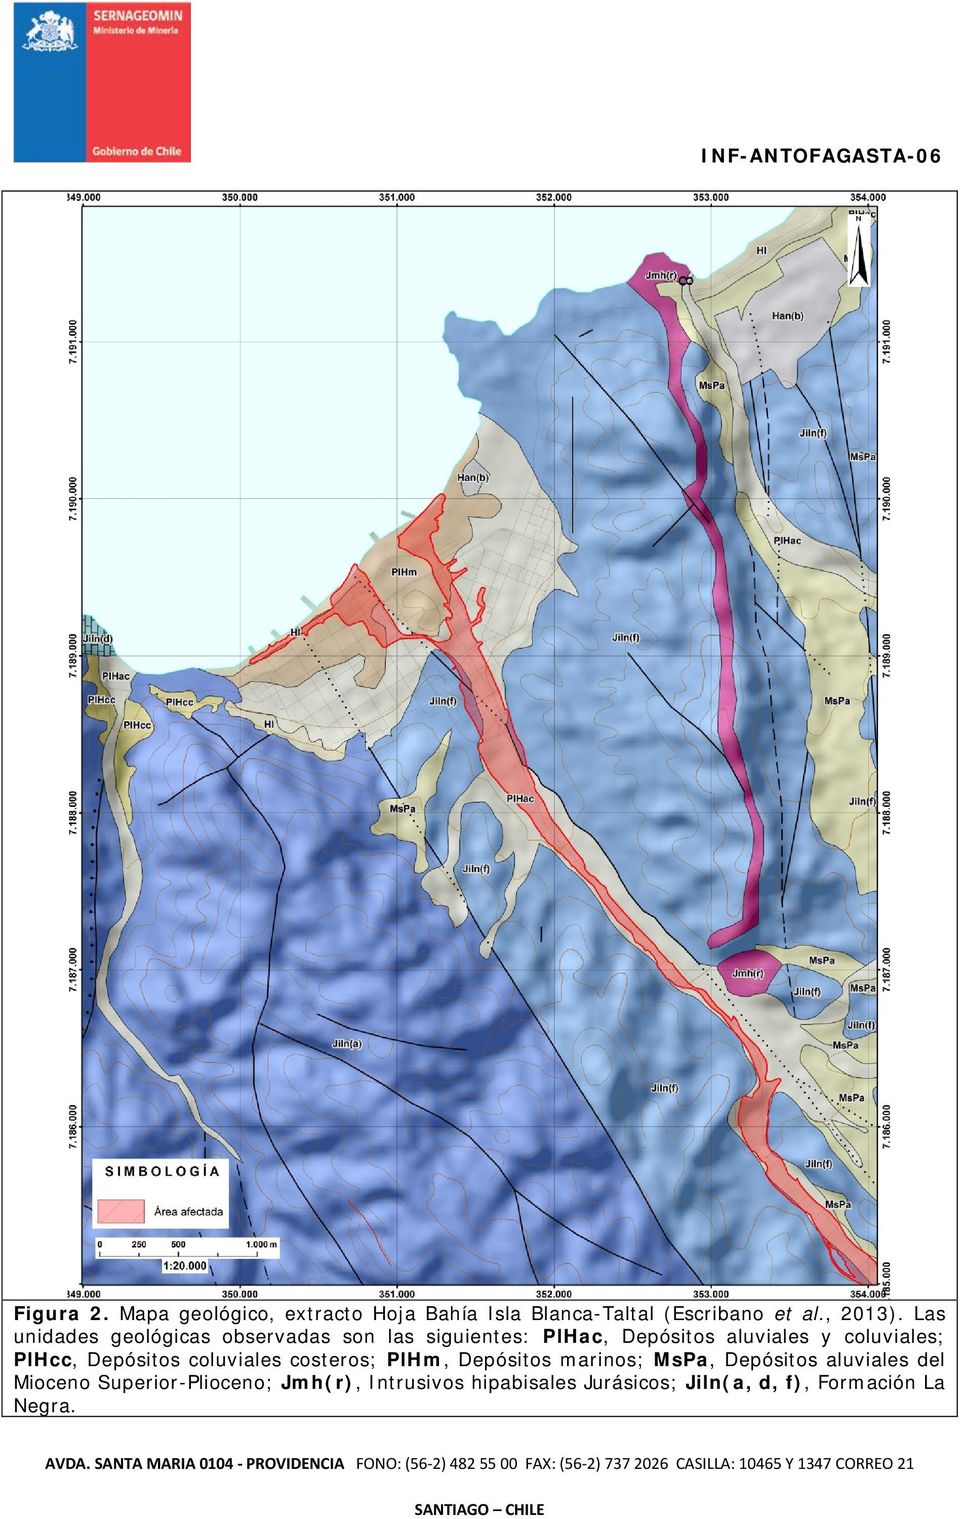 PlHcc, Depósitos coluviales costeros; PlHm, Depósitos marinos; MsPa, Depósitos aluviales del